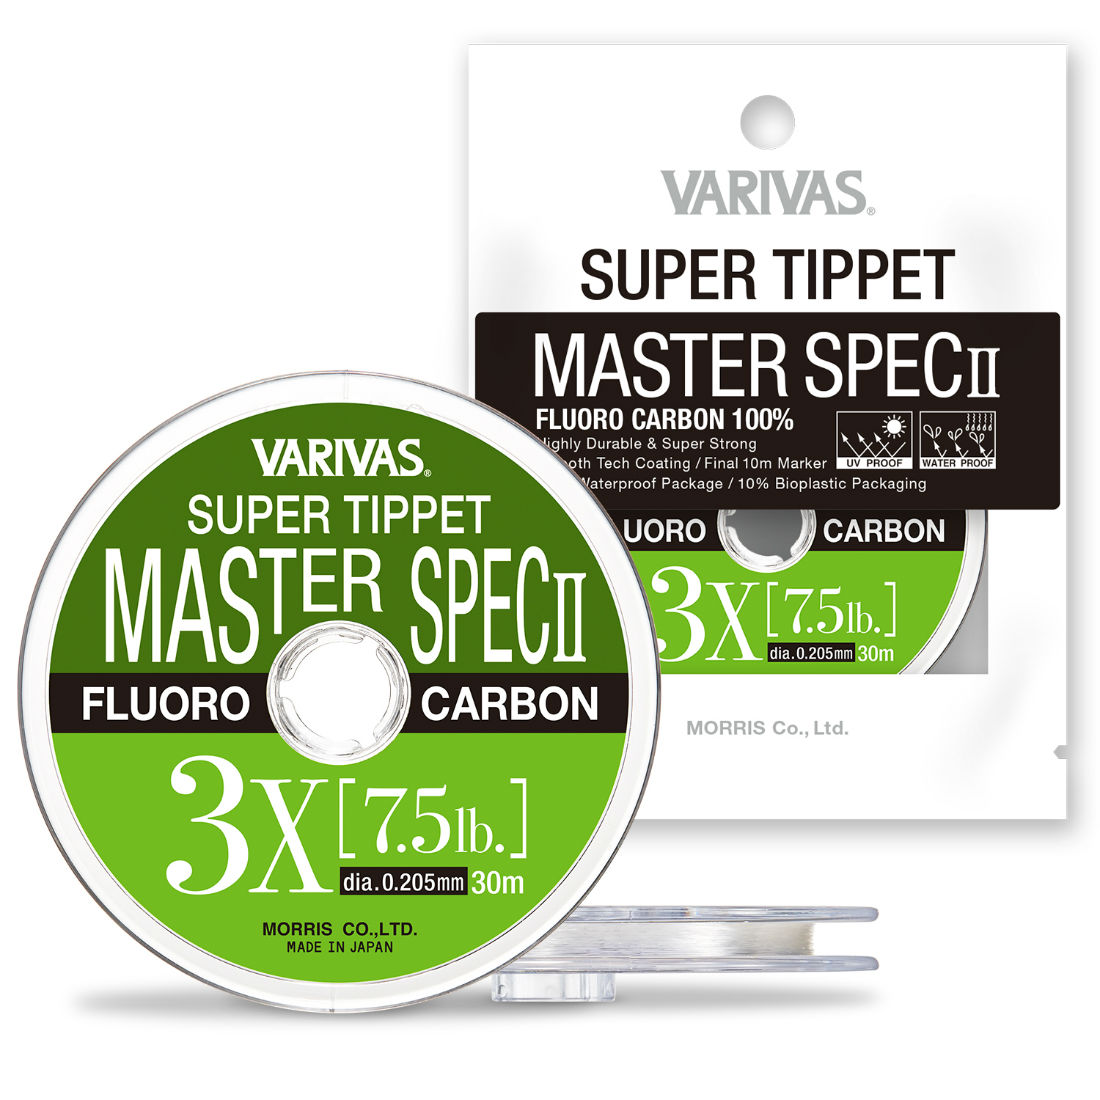 FIR VARIVAS SUPER TIPPET MASTER SPEC ll FLUORO 3X 30m 0.205mm 7.5lb